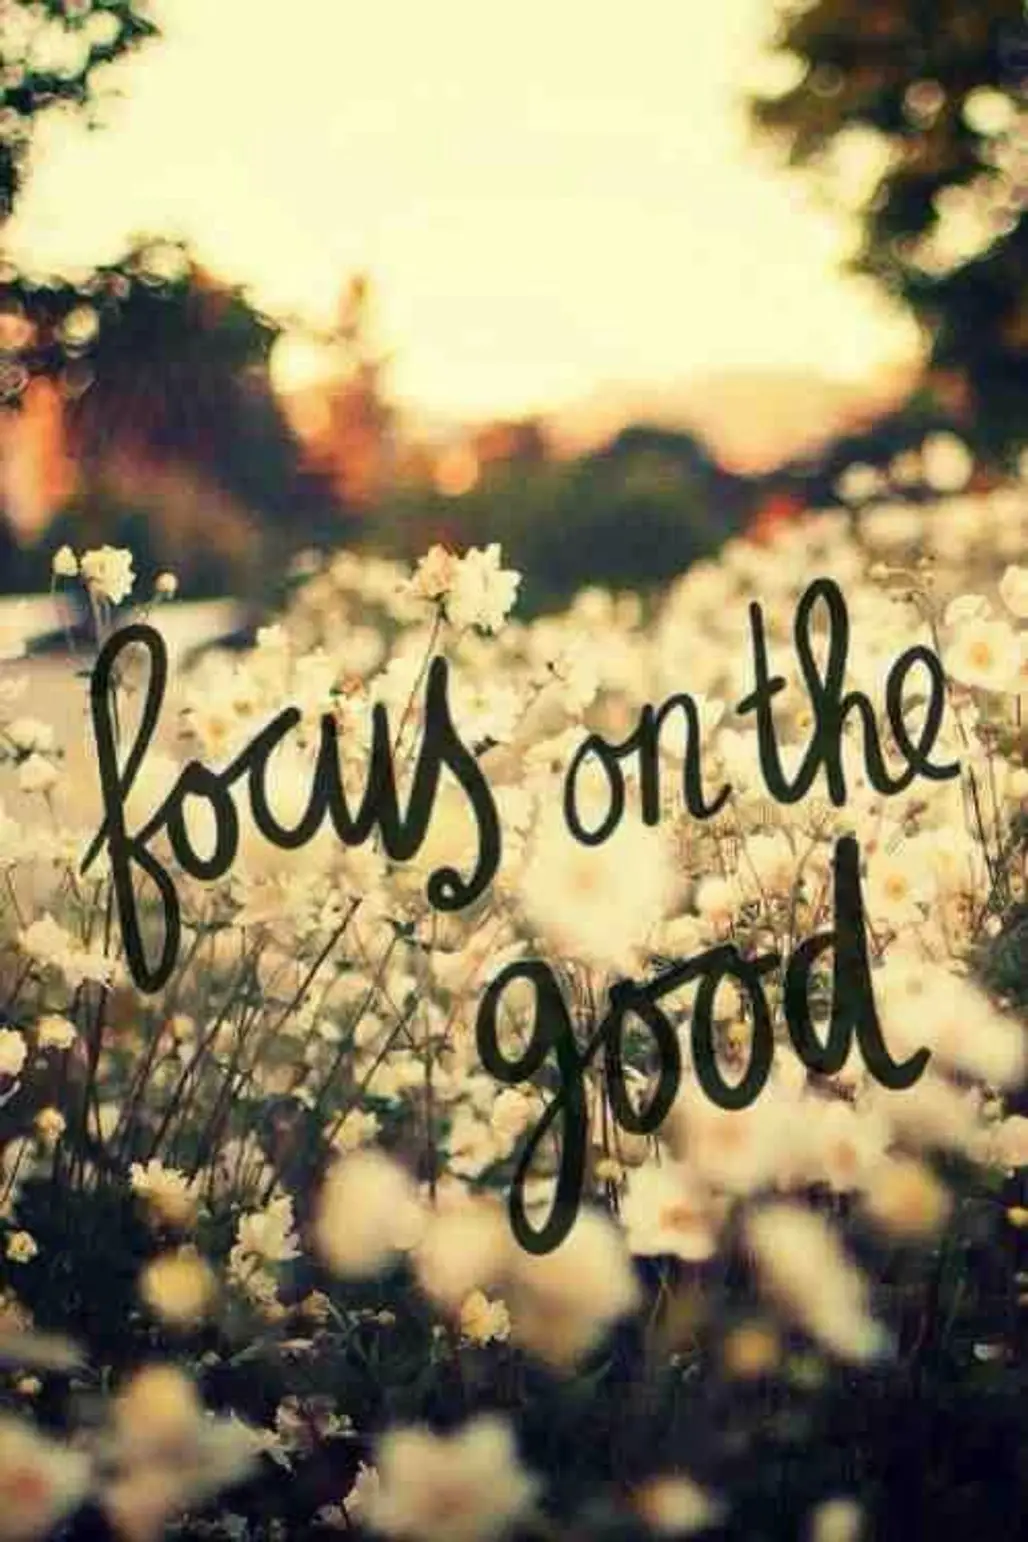 “Focus on the Good”